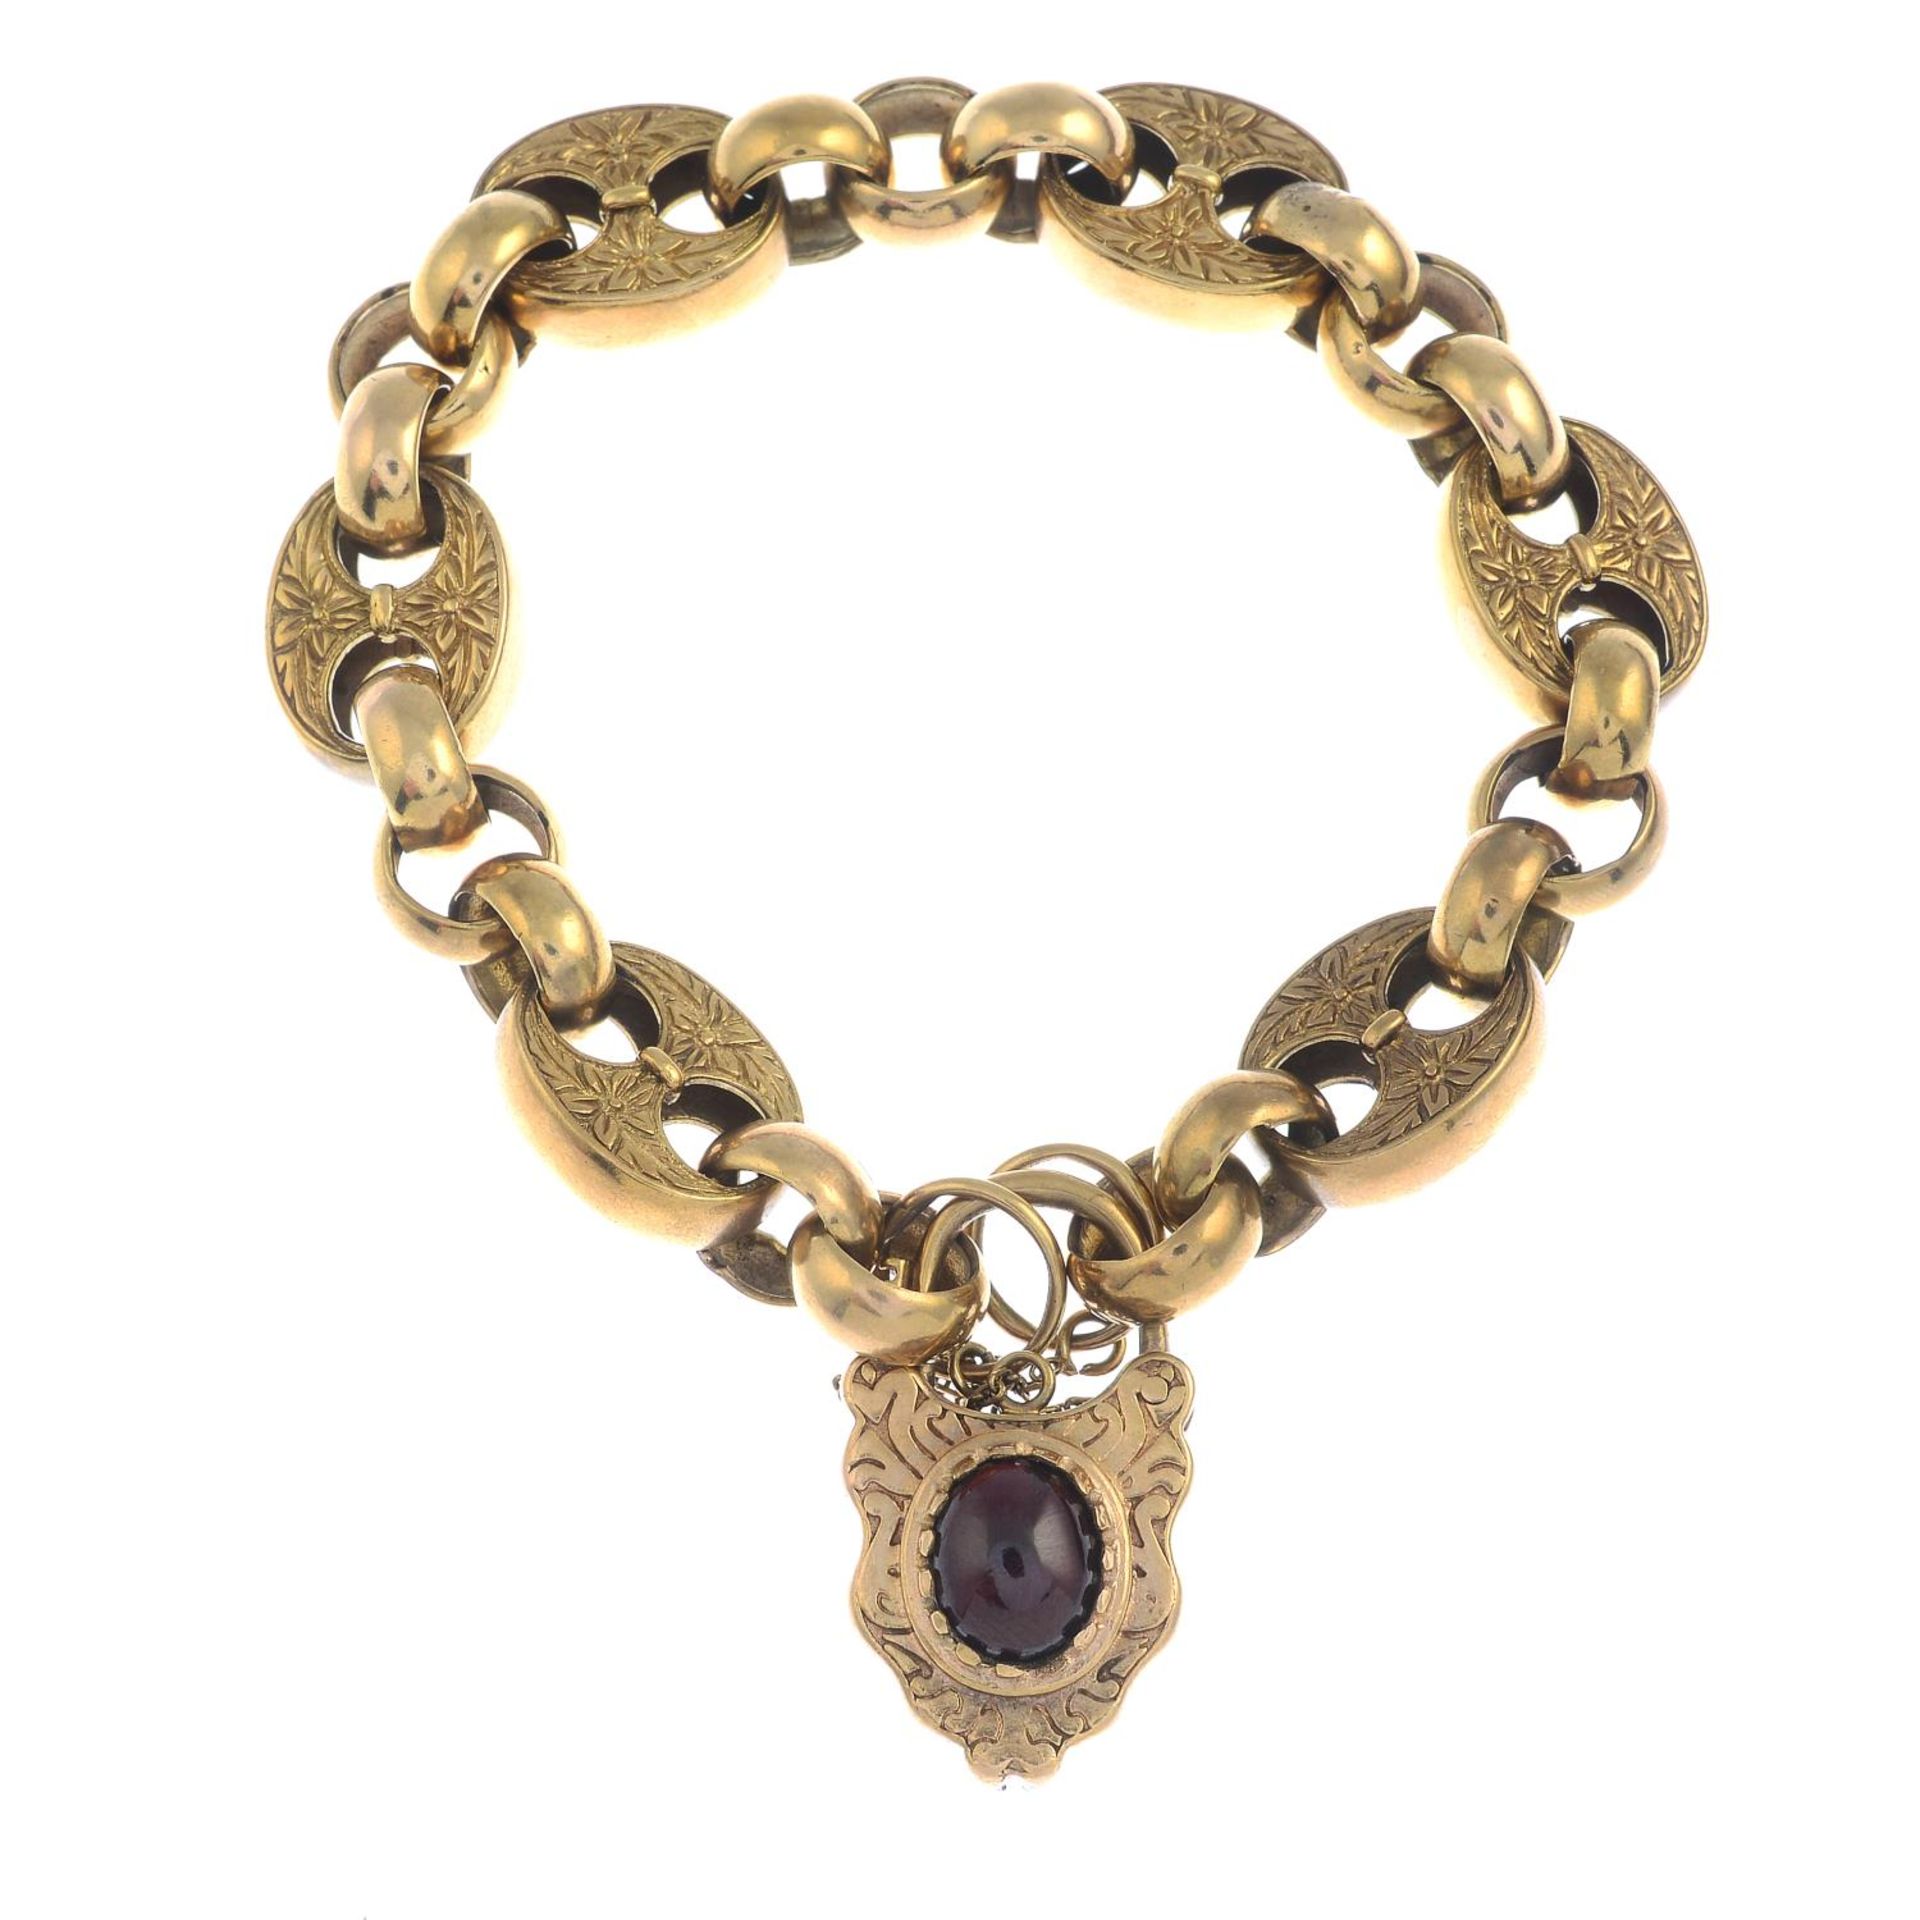 A 9ct gold fancy bracelet, with garnet padlock clasp.Hallmarks for Brimingham.Length 20cms.